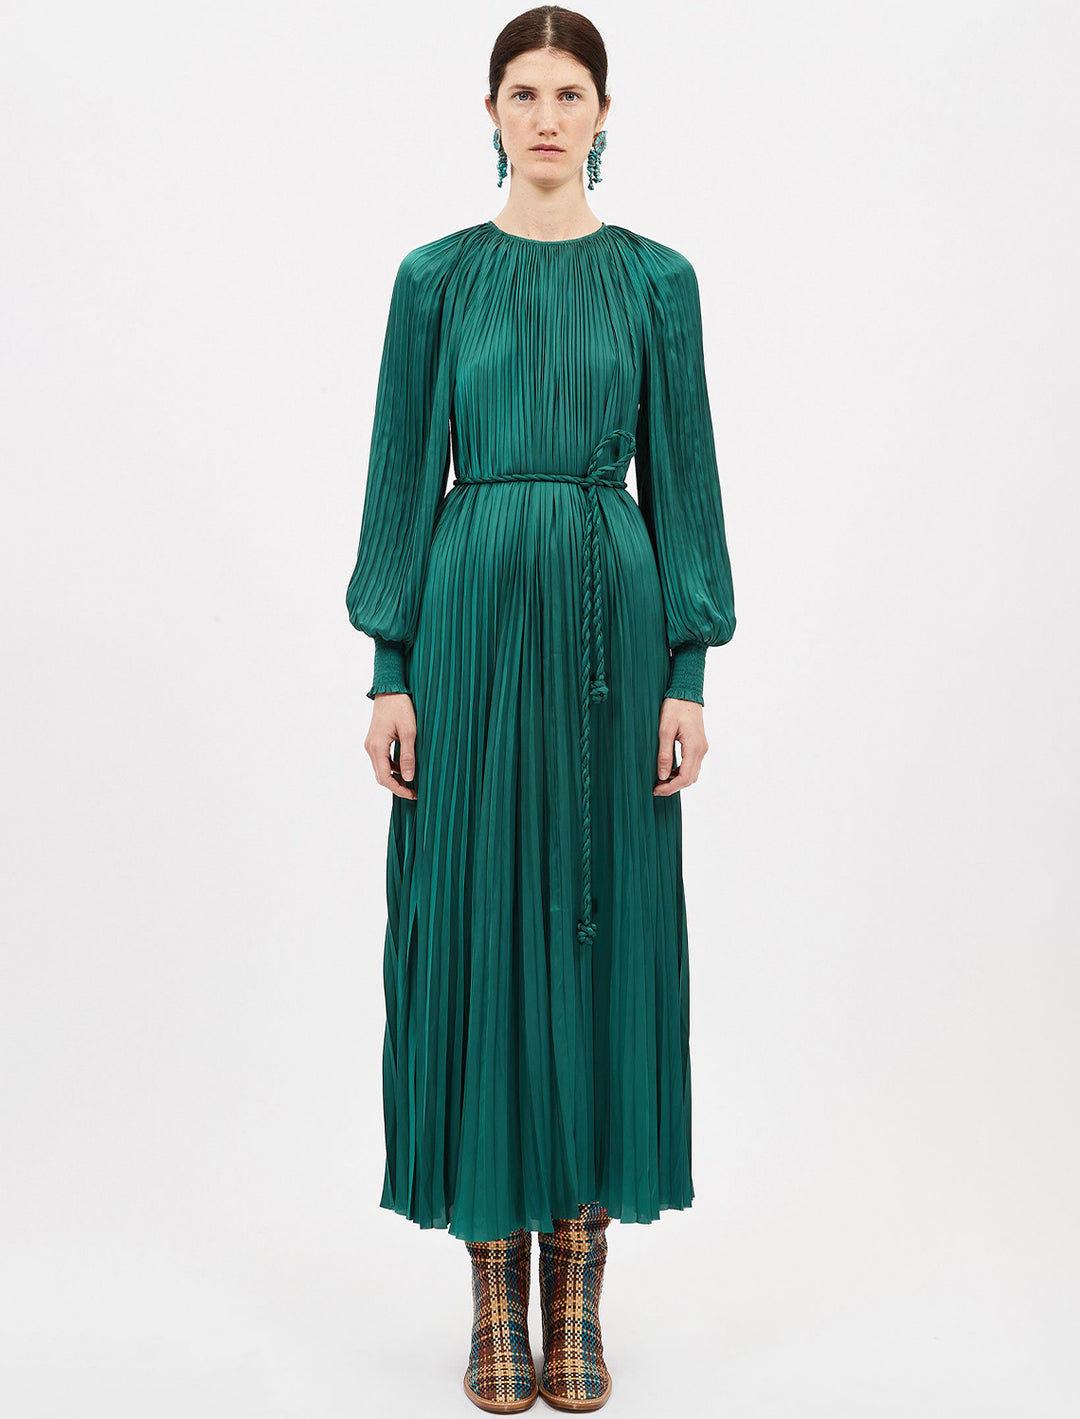 Model wearing Ulla Johnson's zora dress in jadeite.